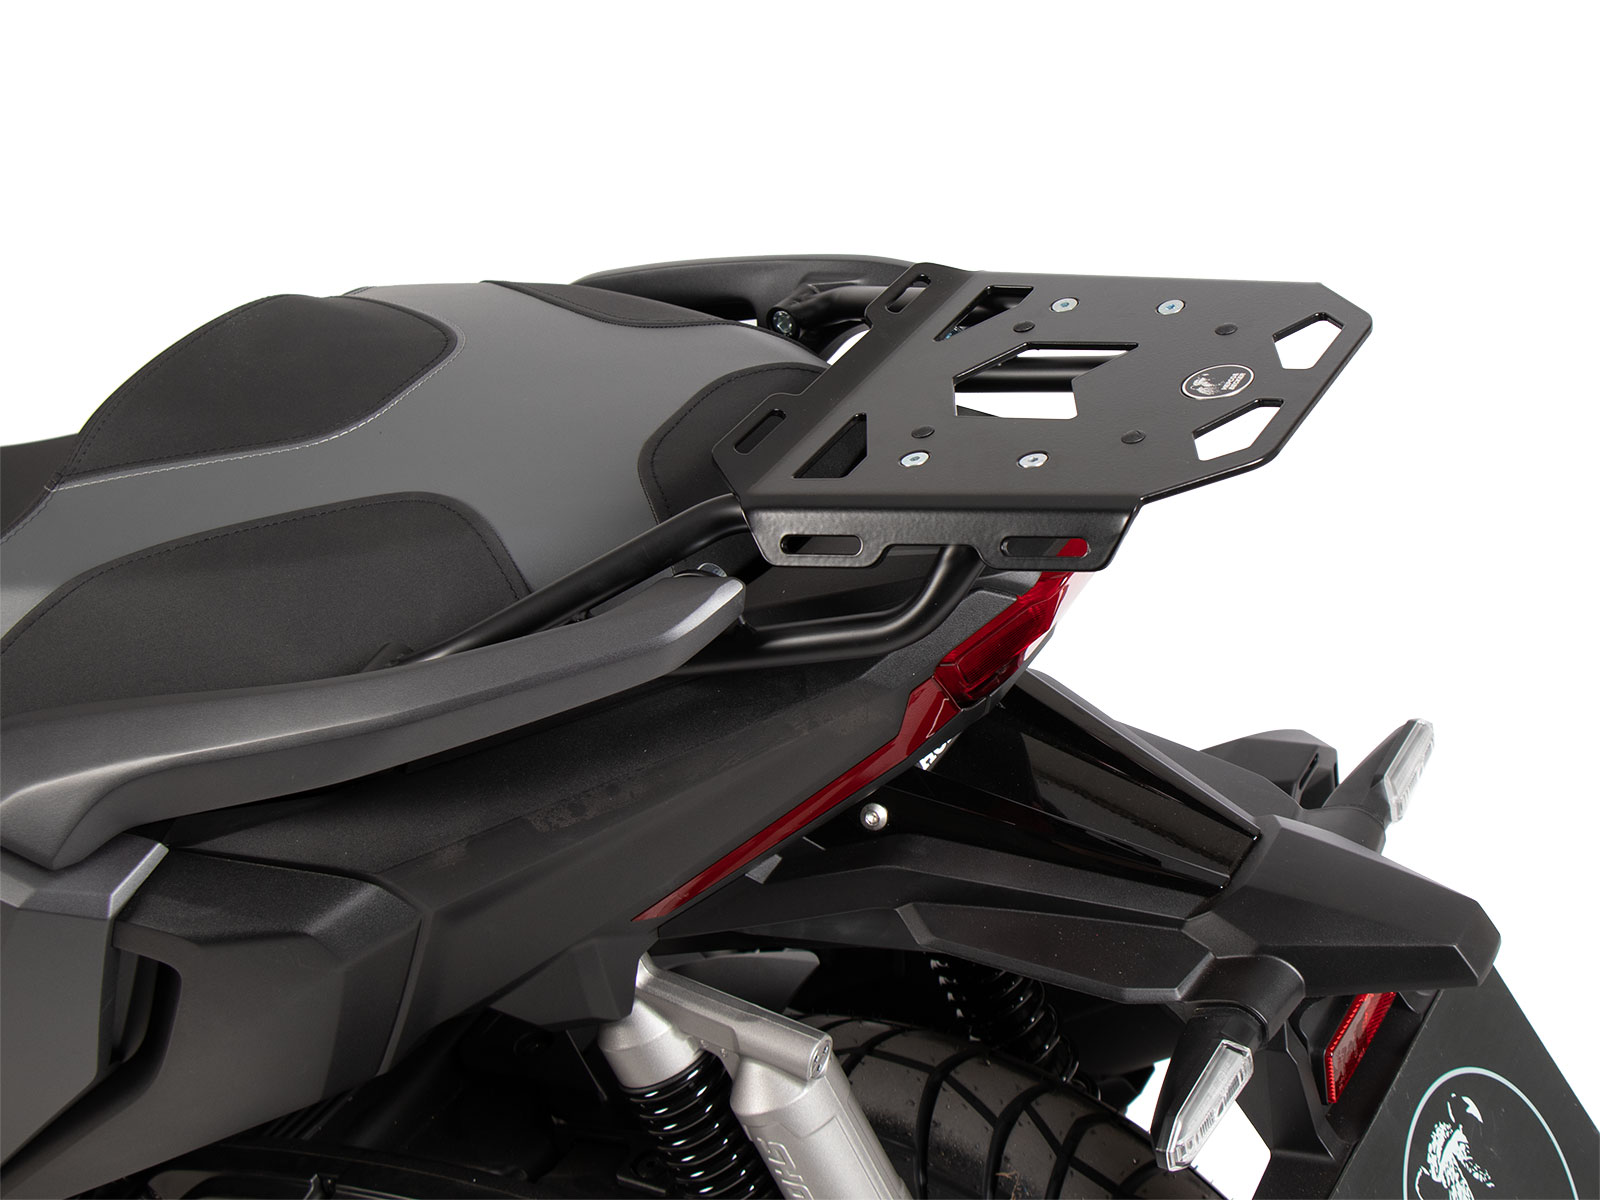 Minirack Softgepäck-Heckträger schwarz für Honda ADV 350 (2022-)